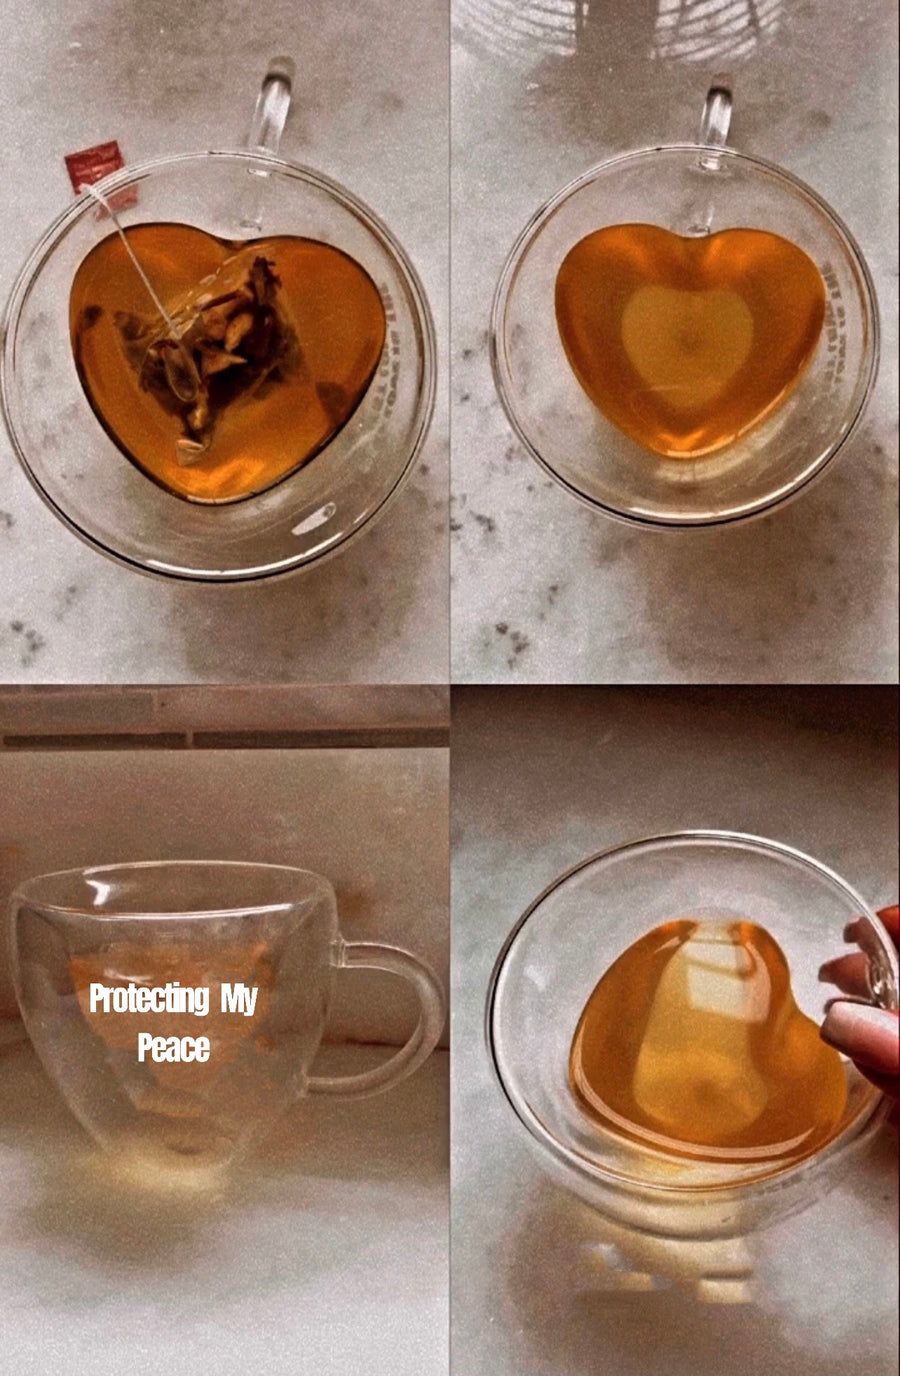 Protecting My Peace heart ❤️ shaped mug.